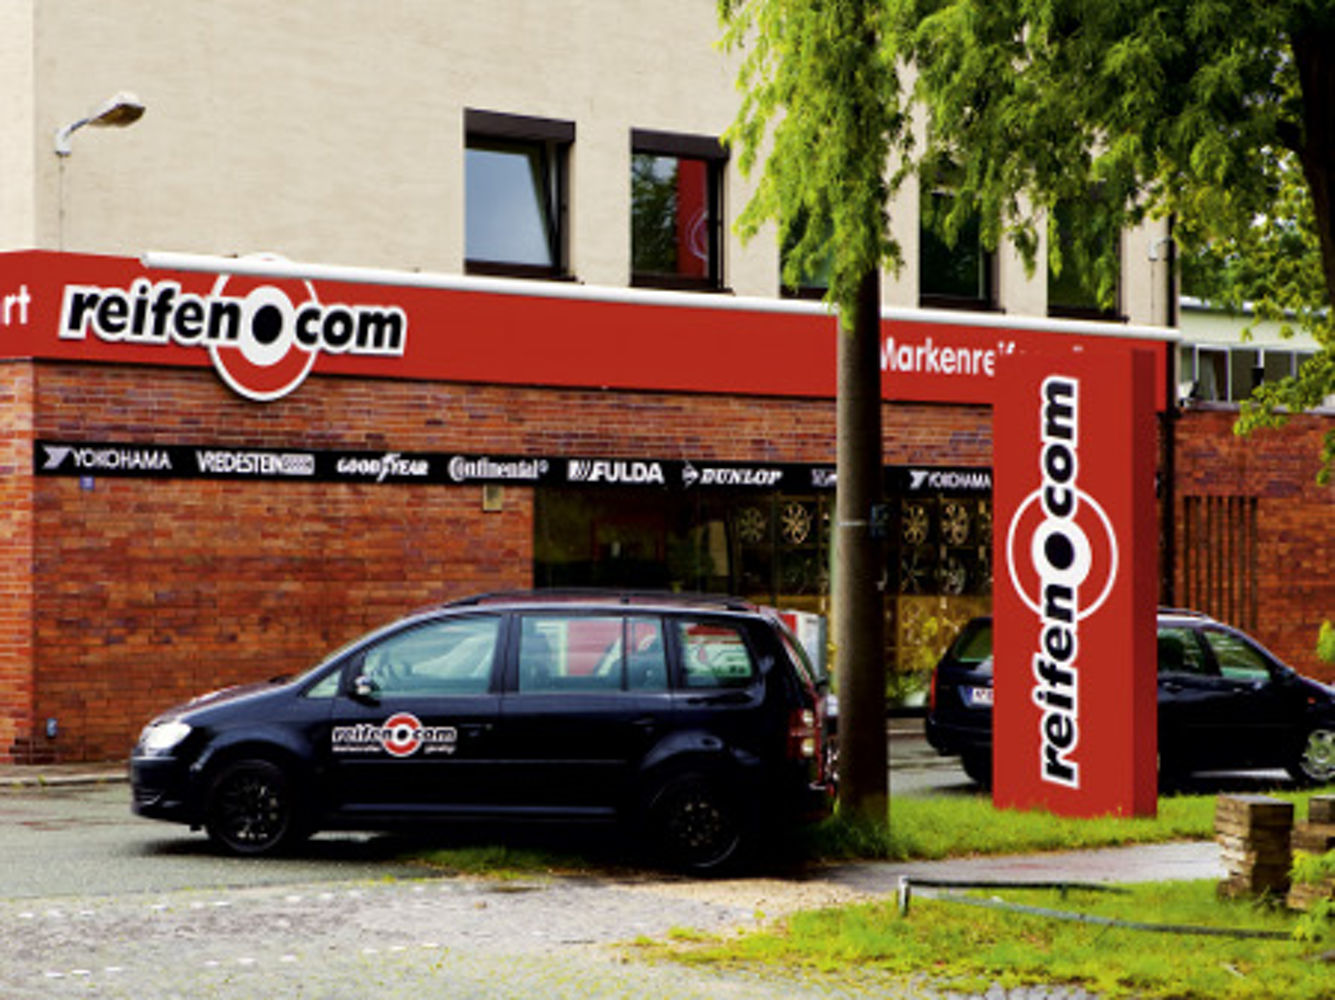 reifen.com-branch in Nürnberg Langwasser